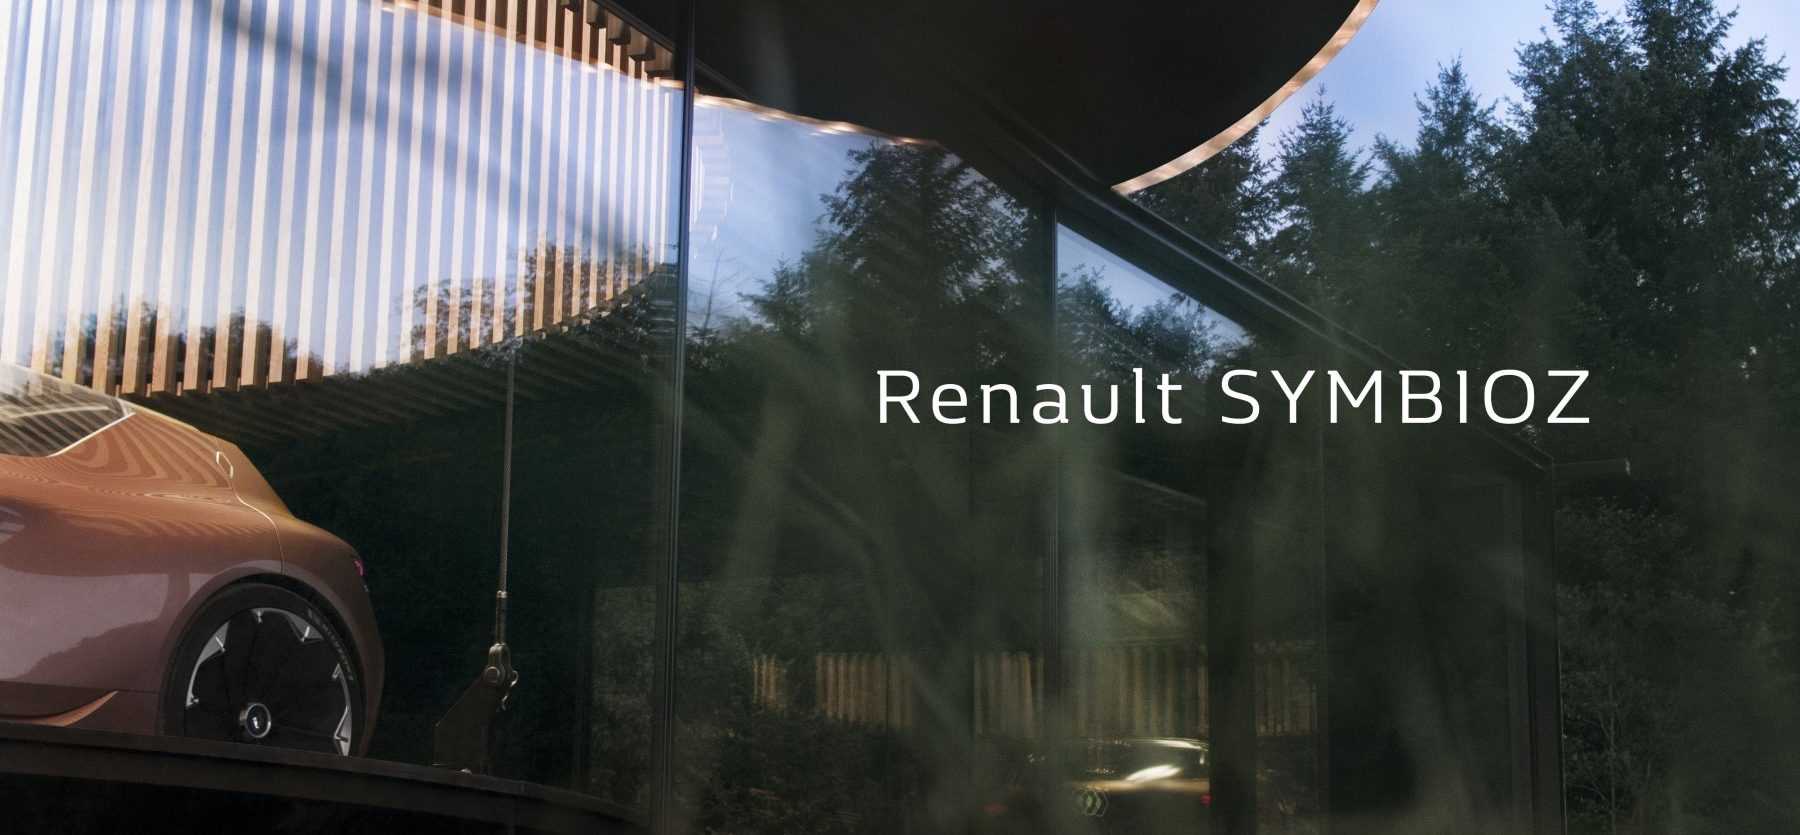 Renault Symbioz 2017